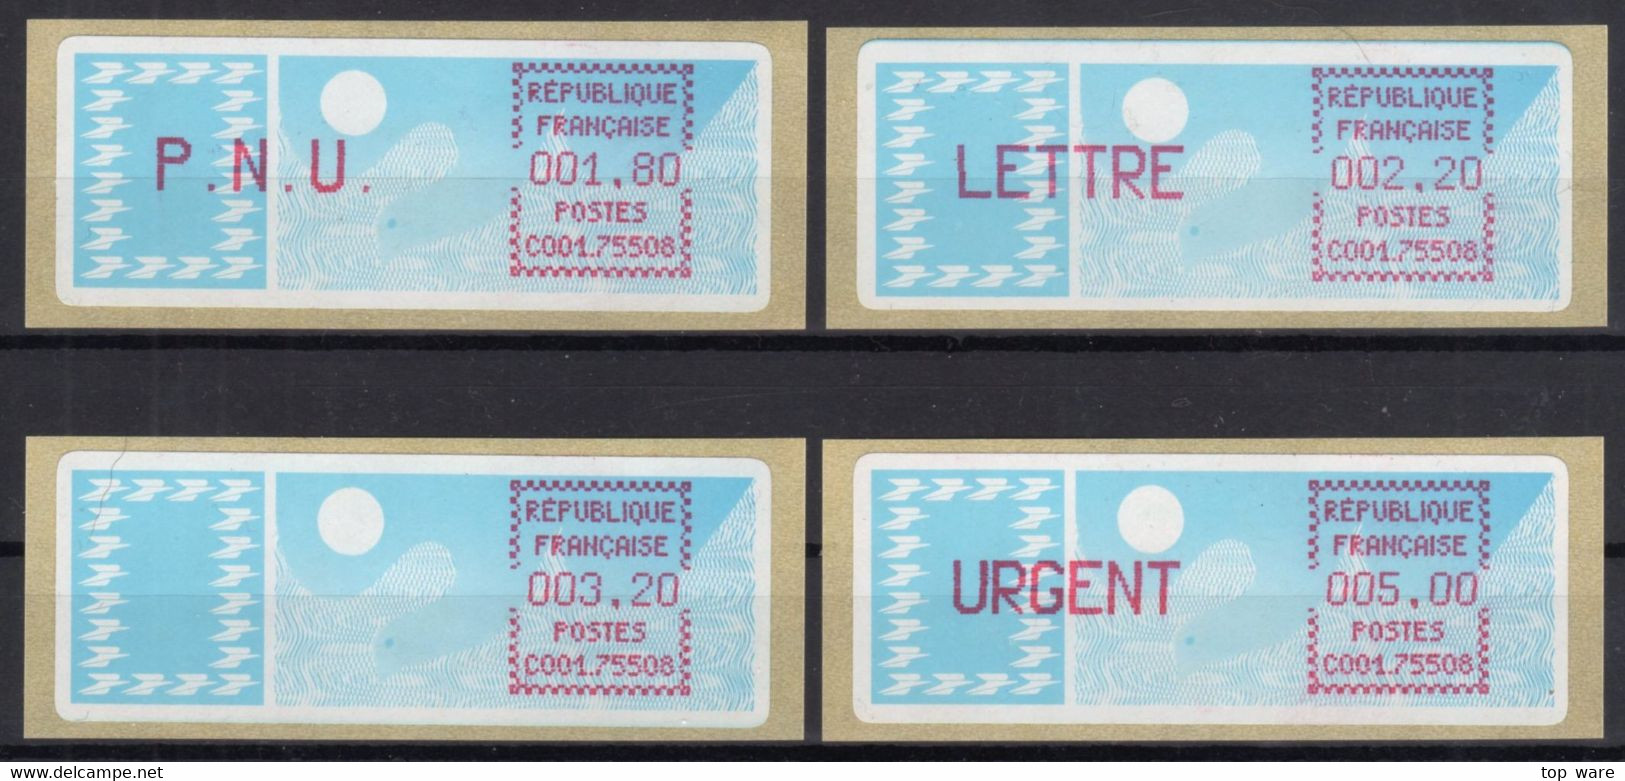 France ATM Stamps C001.75508 Michel 6.9 Zd Series ZS2 Neuf / MNH / Crouzet LSA Distributeurs Automatenmarken Frama Lisa - 1985 Papier « Carrier »